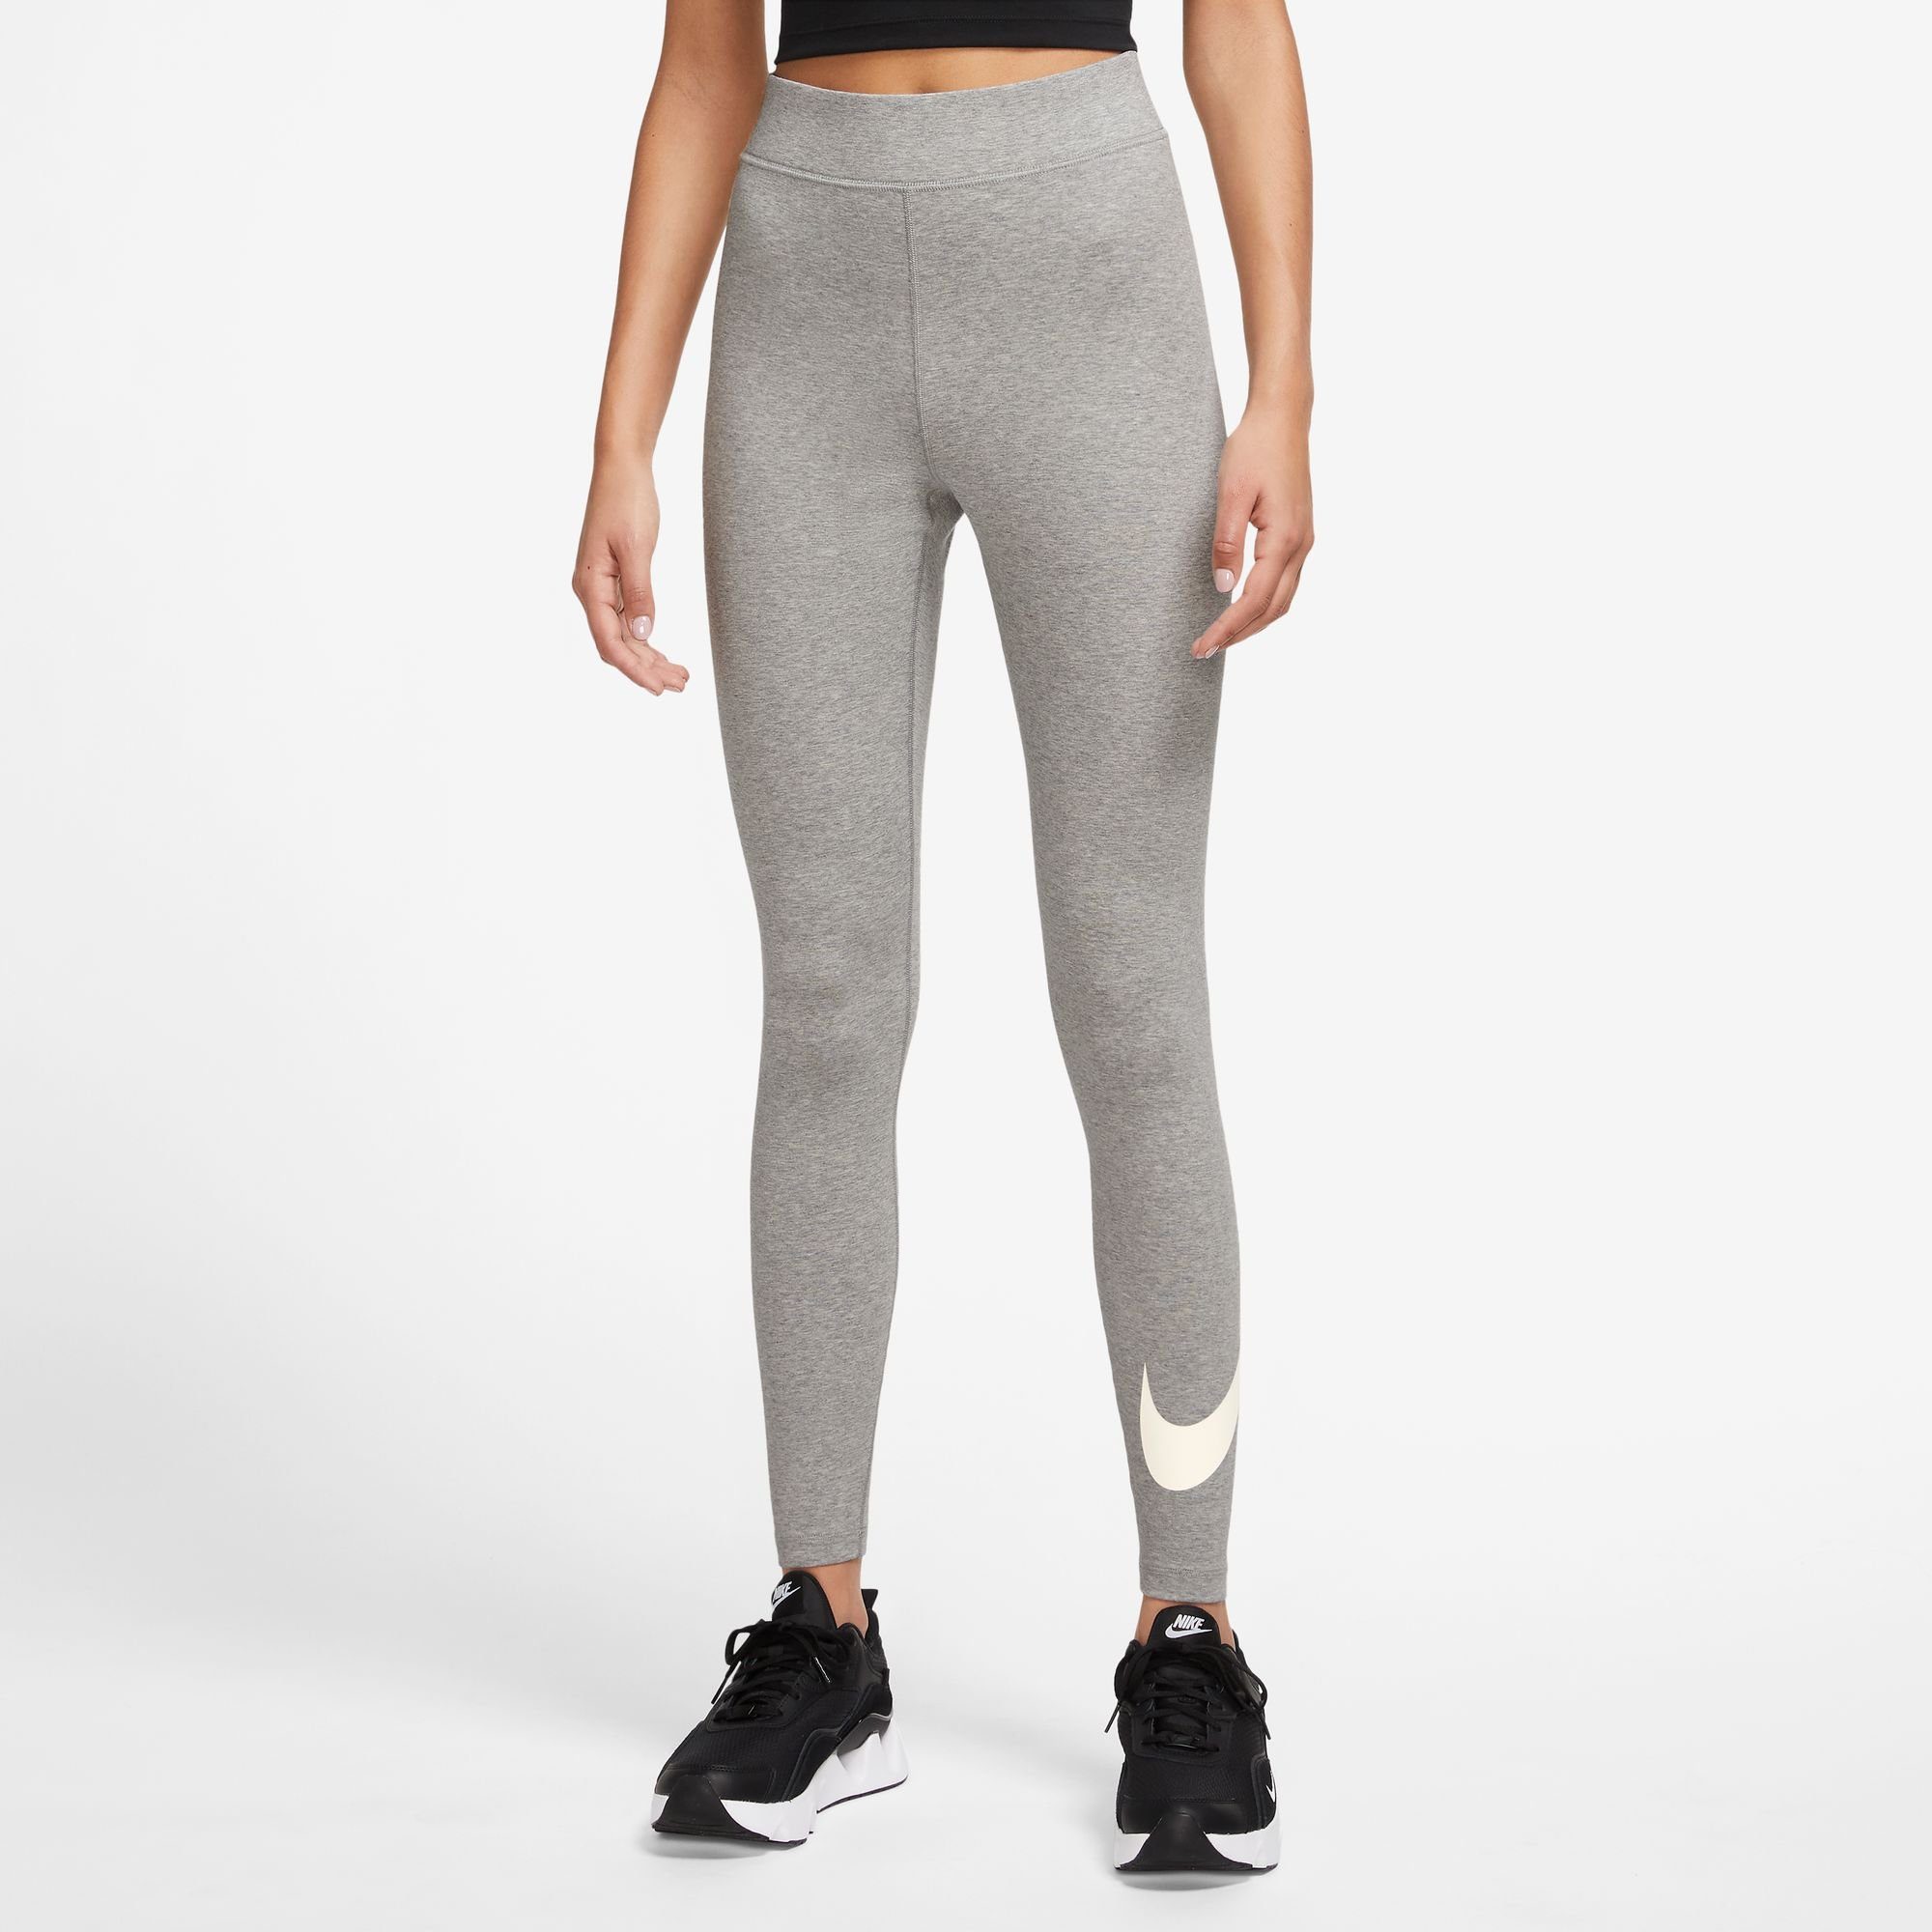 Nike CLASSICS HIGH-WAISTED GREY Leggings GRAPHIC Sportswear DK WOMEN'S LEGGINGS HEATHER/SAIL